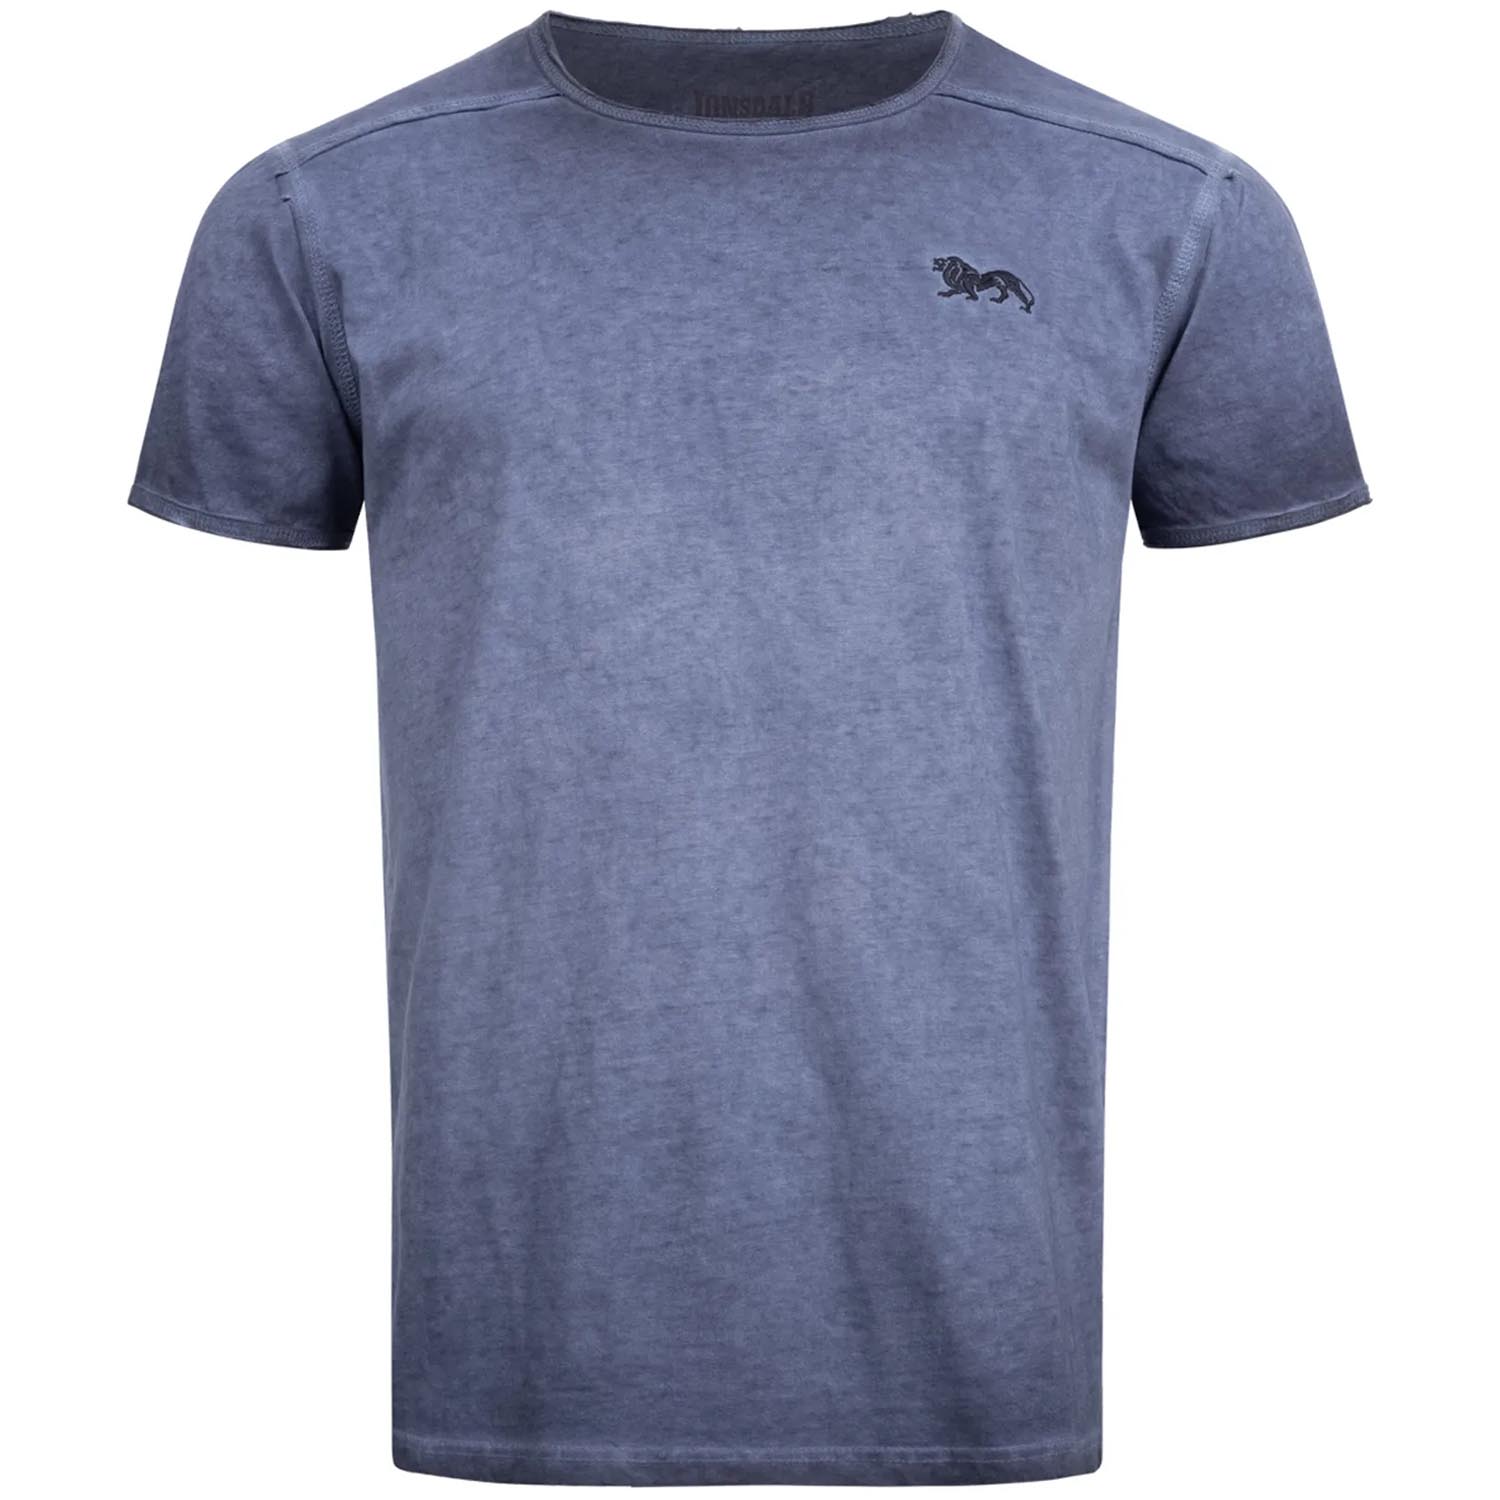 Lonsdale T-Shirt, Portskerra, blau, XXL